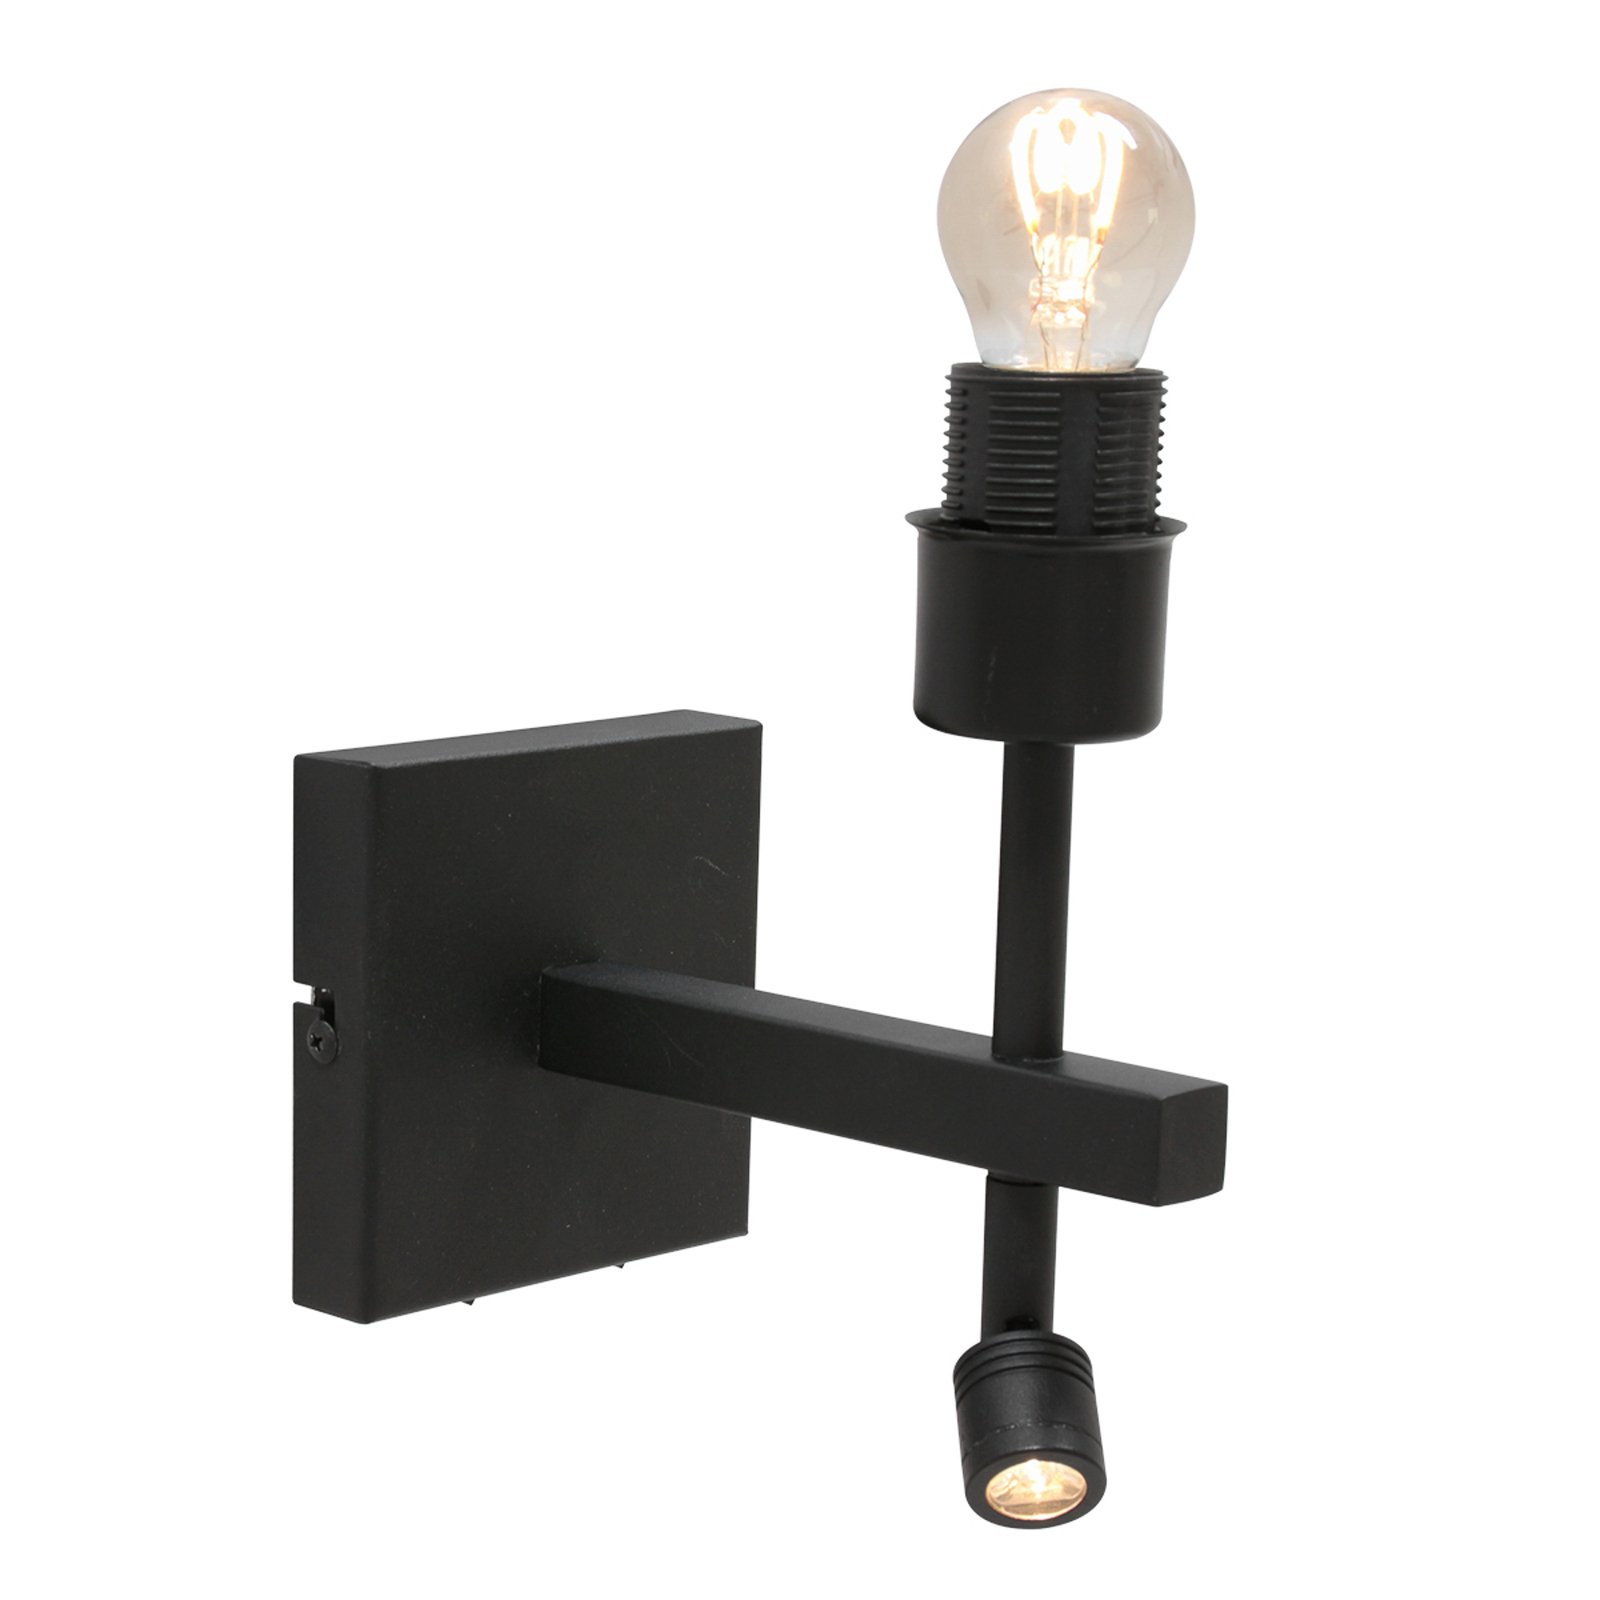 Stang wall light, LED reading light, black/natural wickerwork